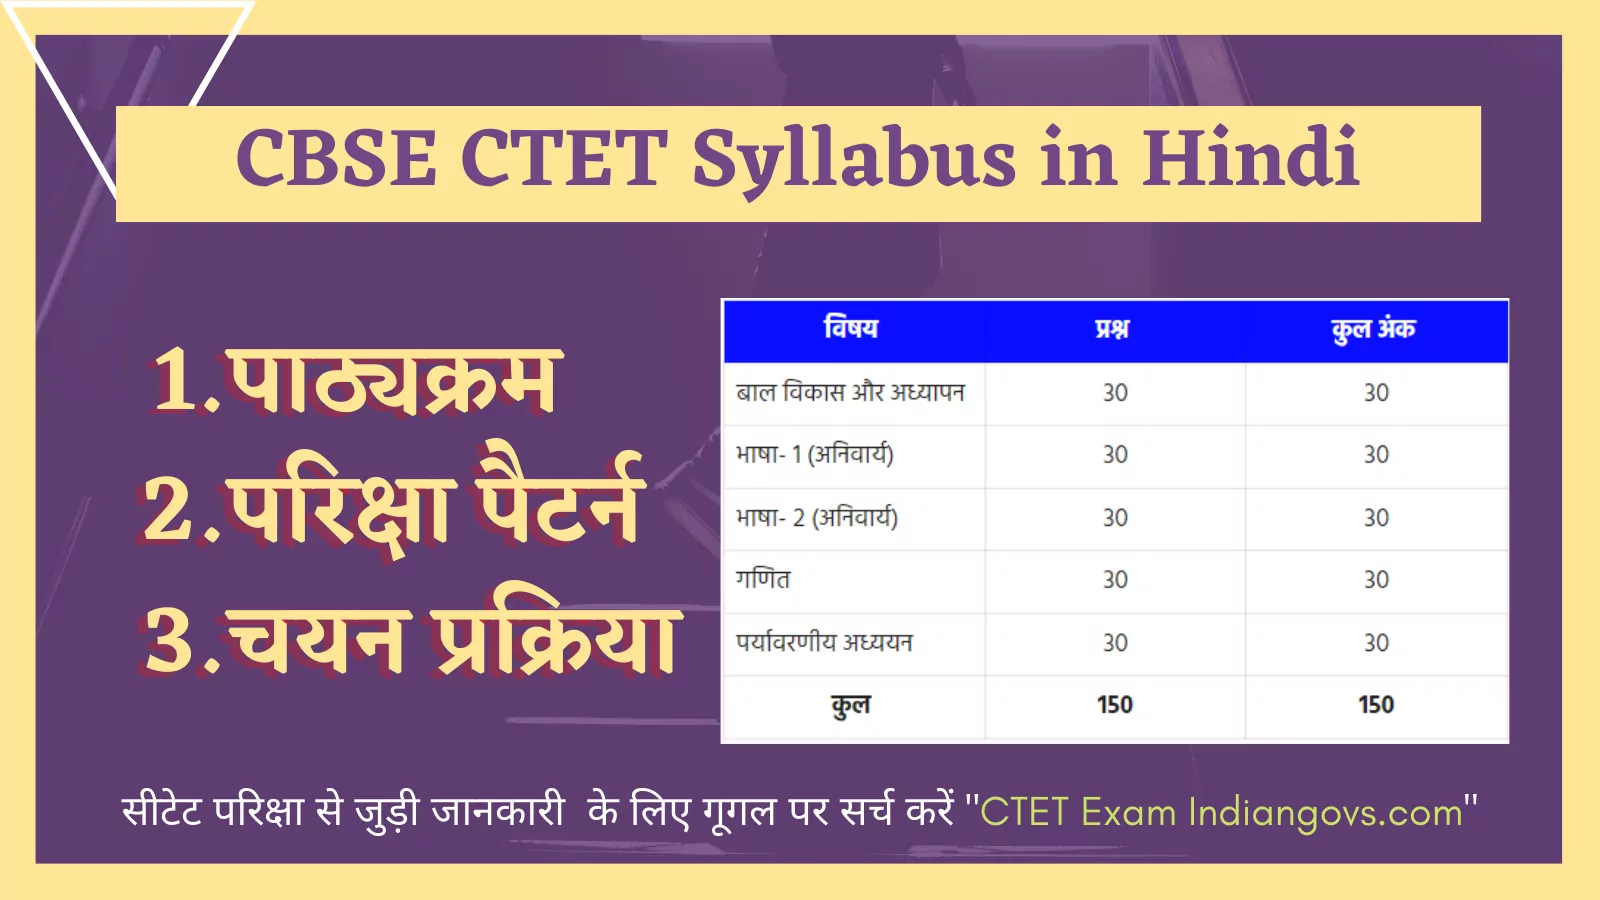 cbse ctet syllabus in hindi